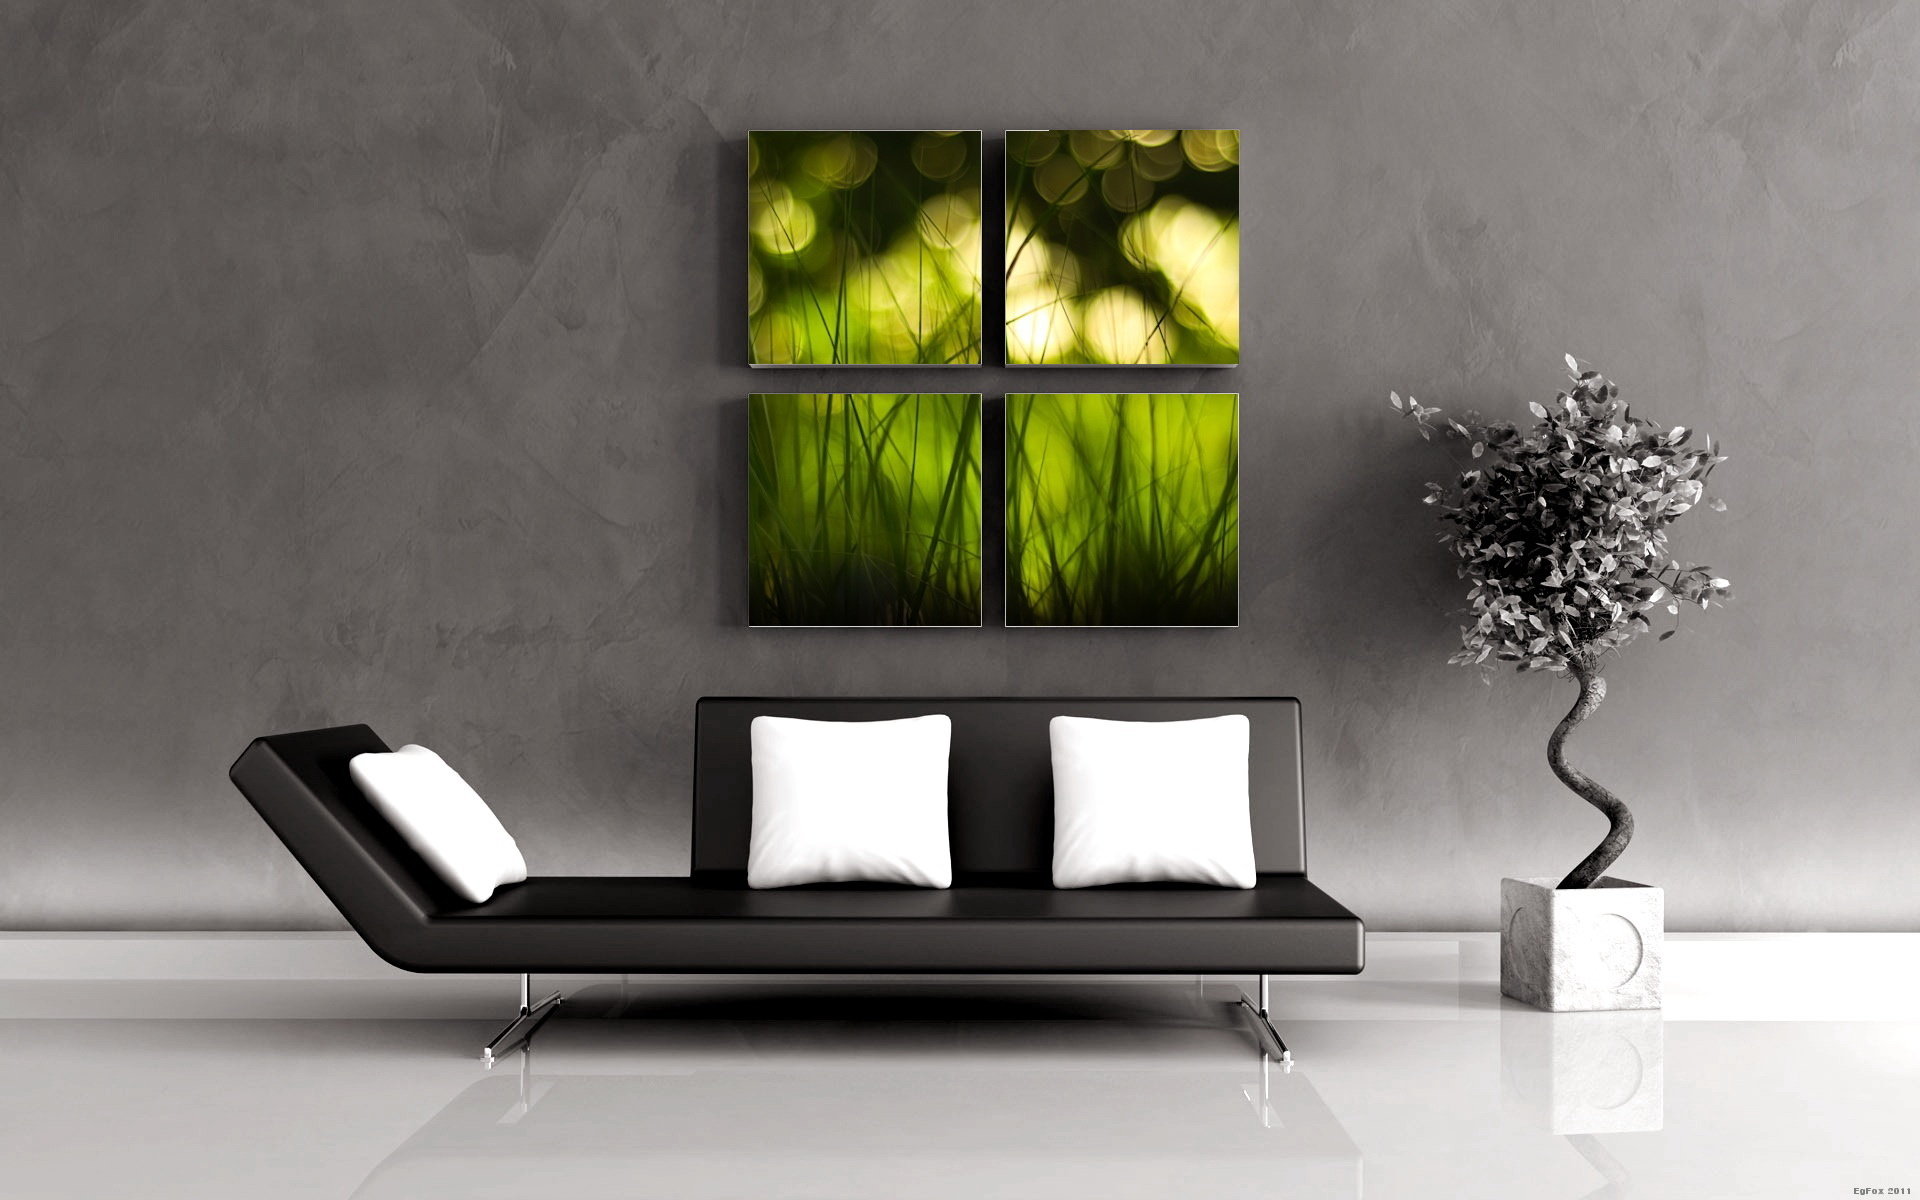 Free download Furniture wallpaper ID:138270 hd 1920x1200 for desktop